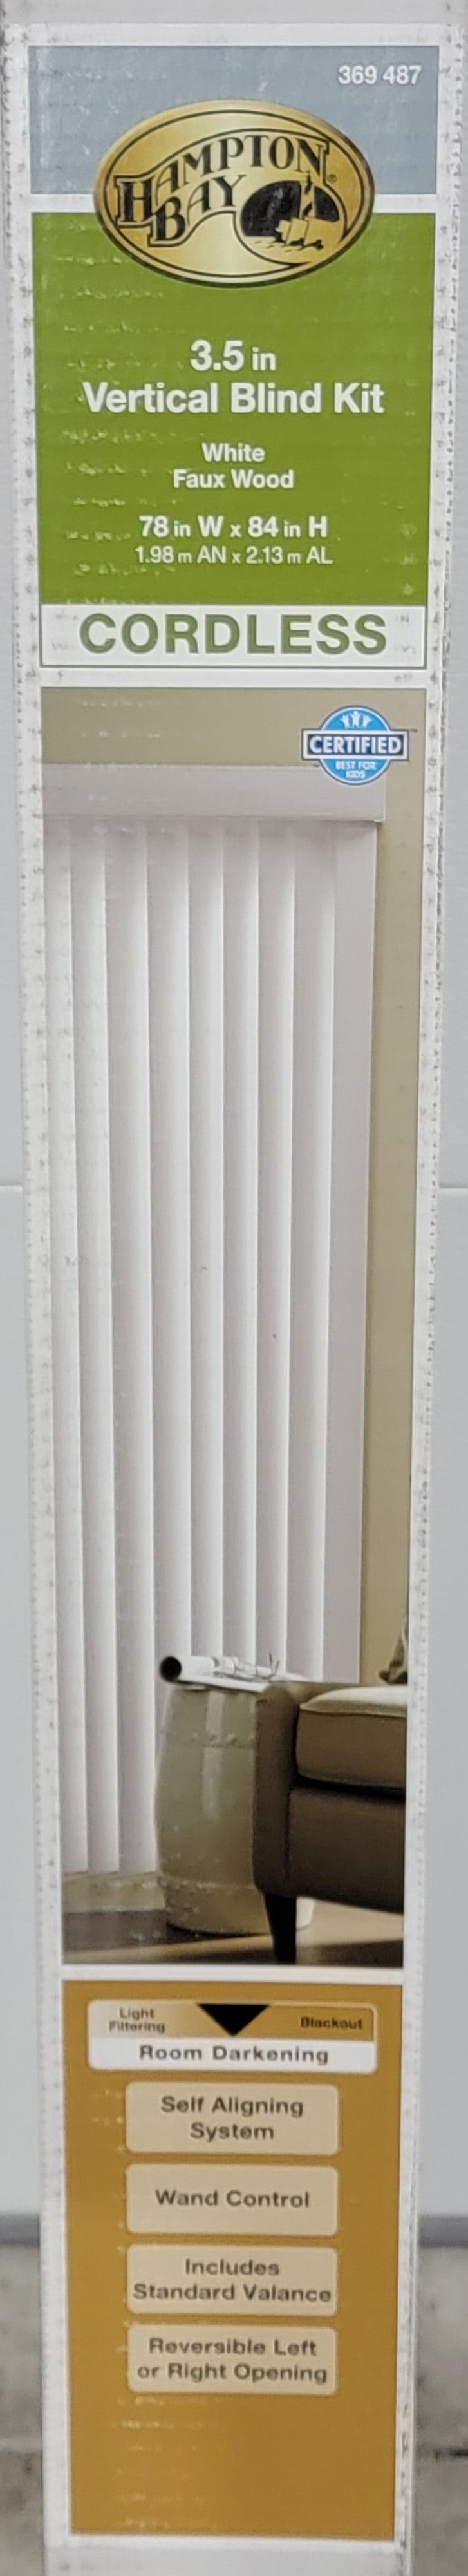 Hampton Bay White Vertical Blind Kit Sliding Door Patio Window 78